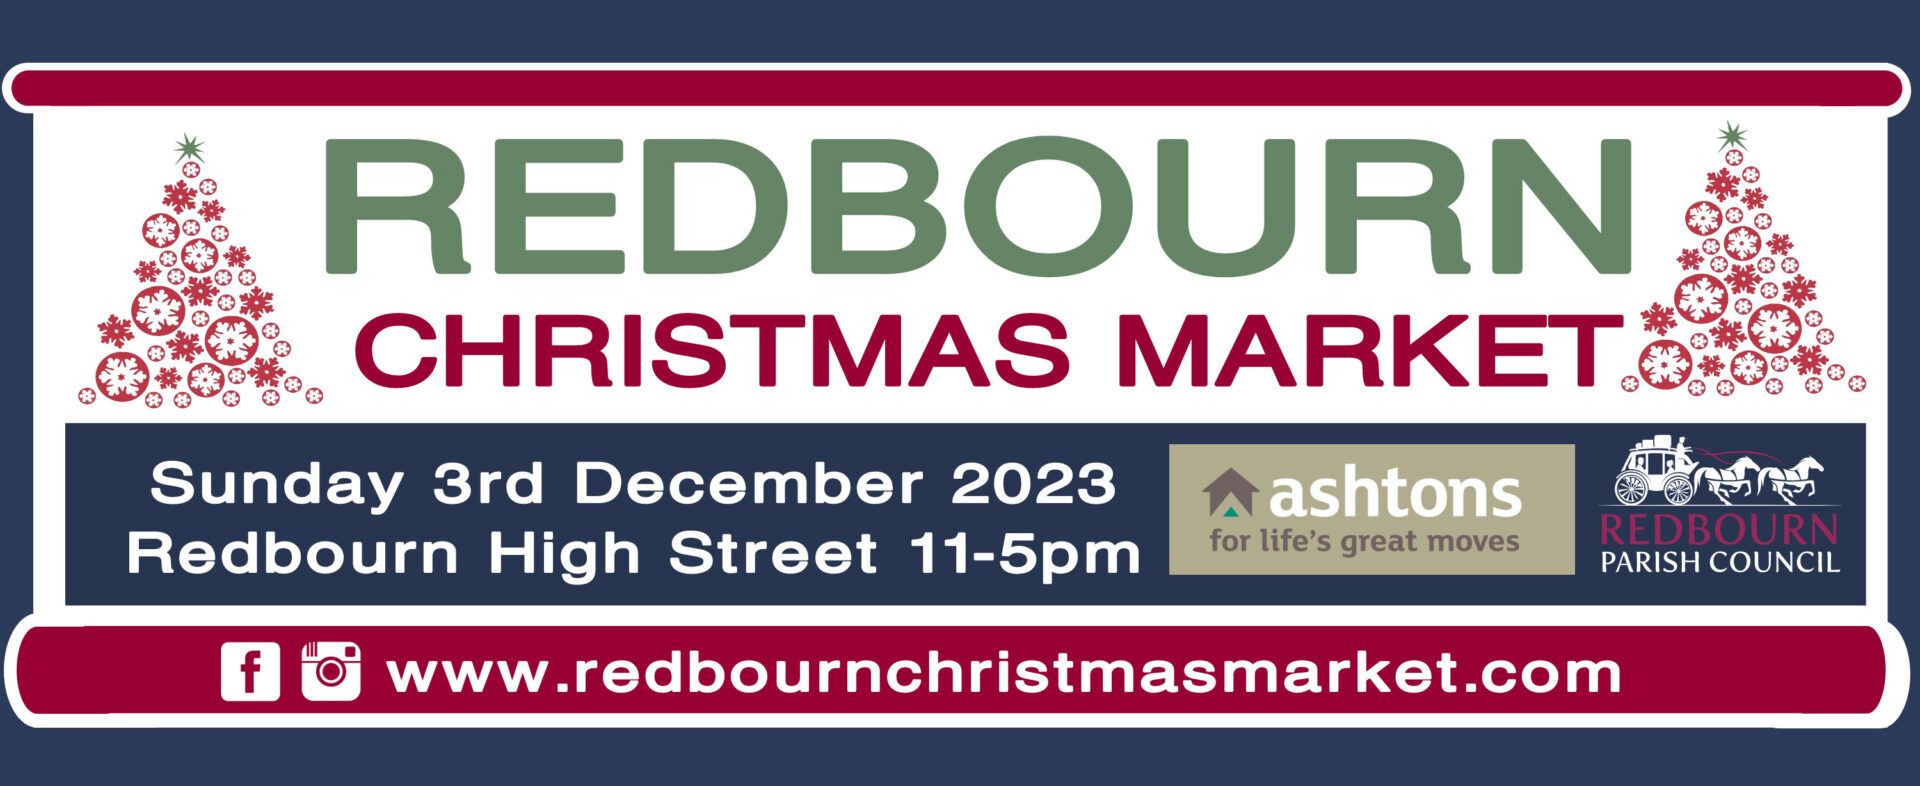 Redbourn Christmas Market